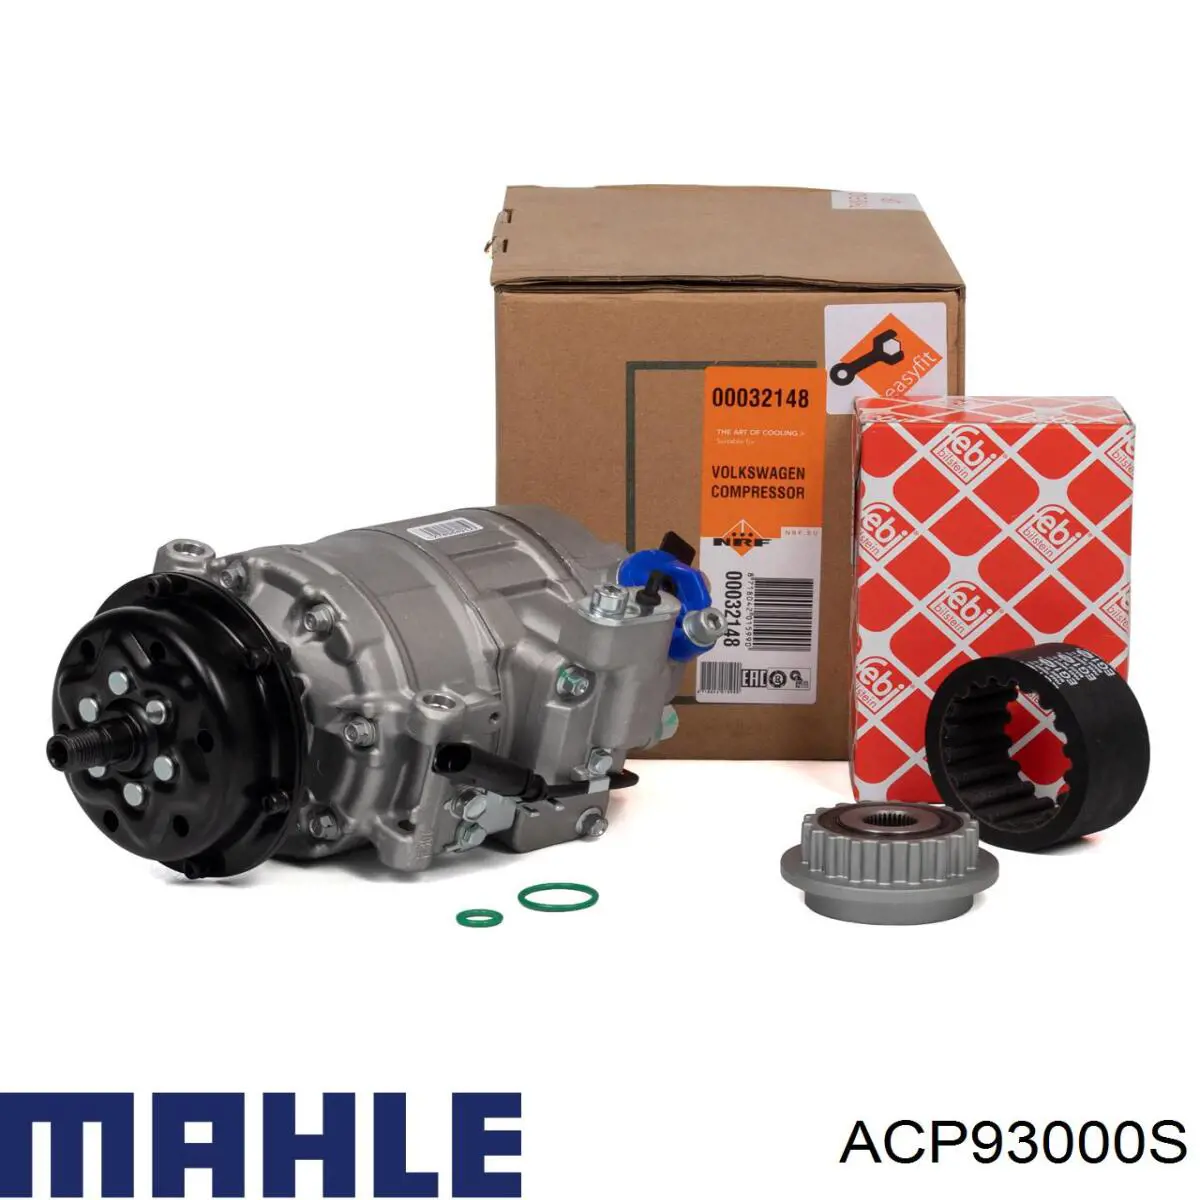 ACP 93 000S Mahle Original compresor de aire acondicionado